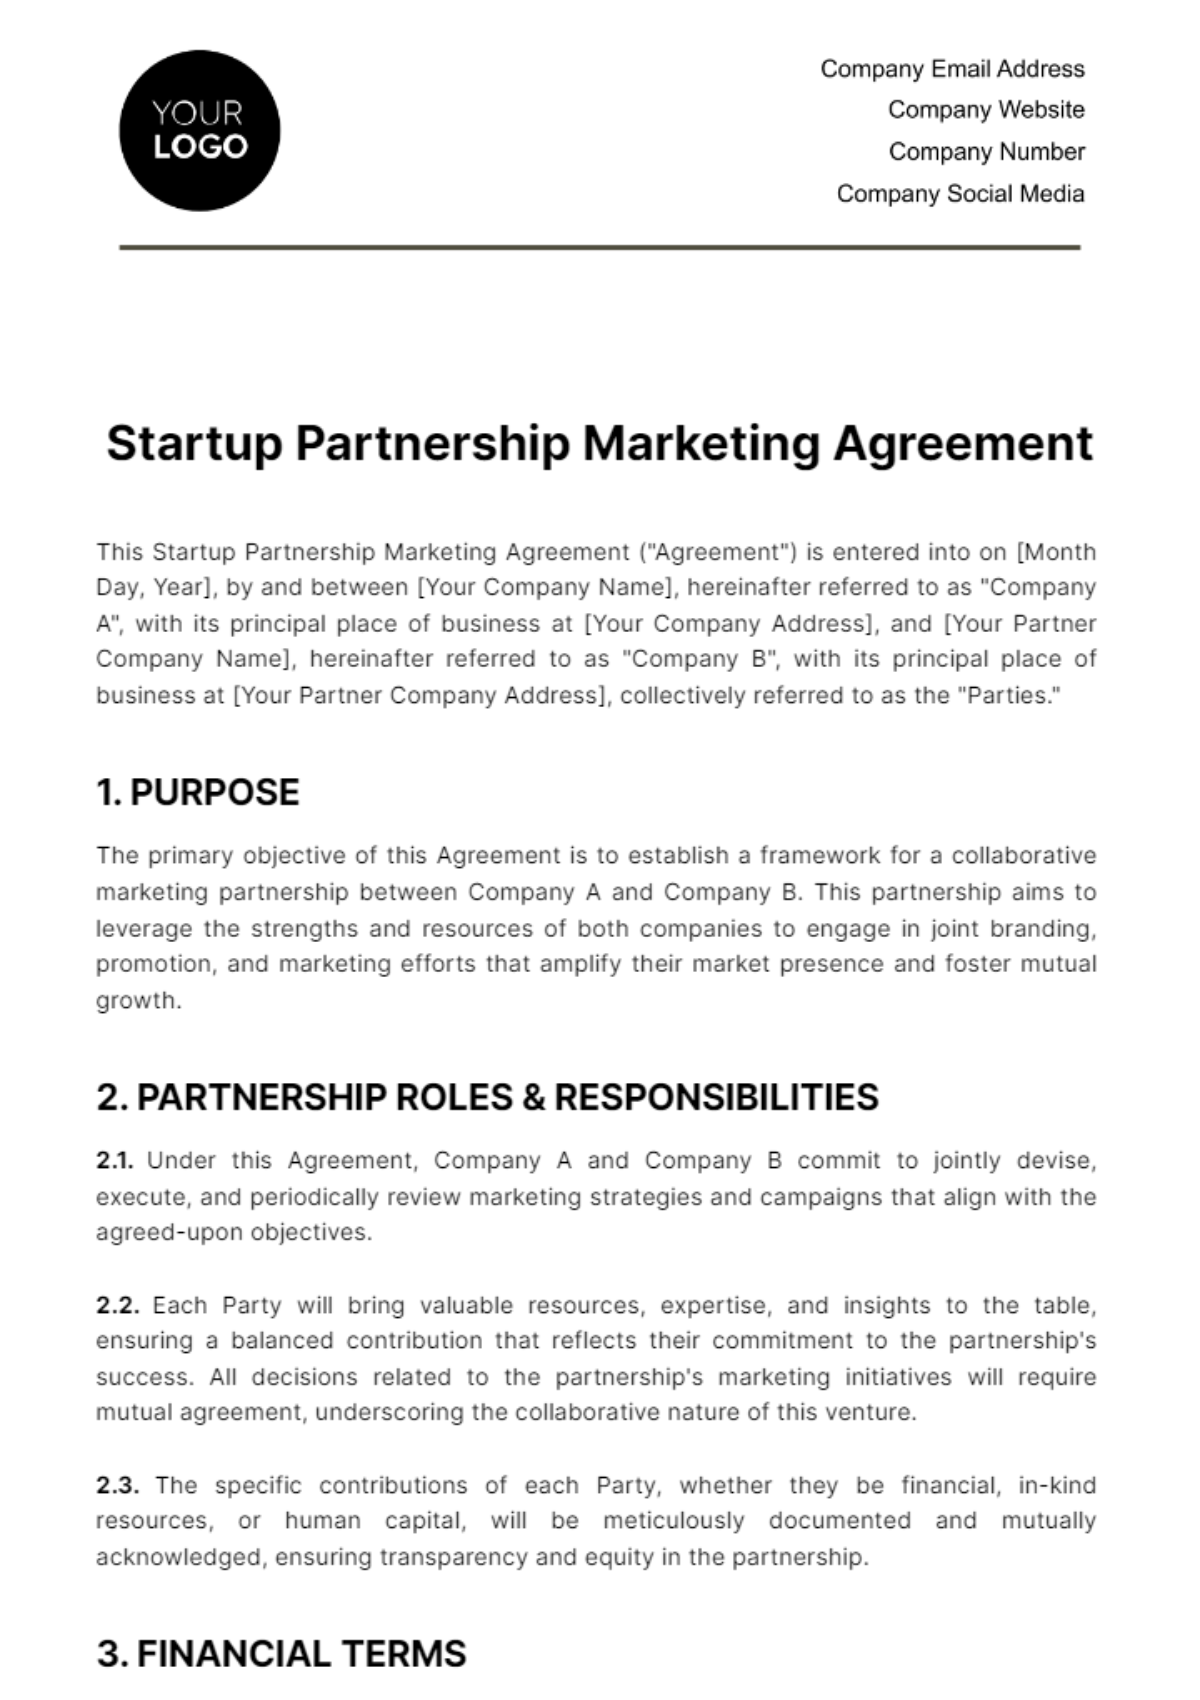 Free Startup Partnership Marketing Agreement Template